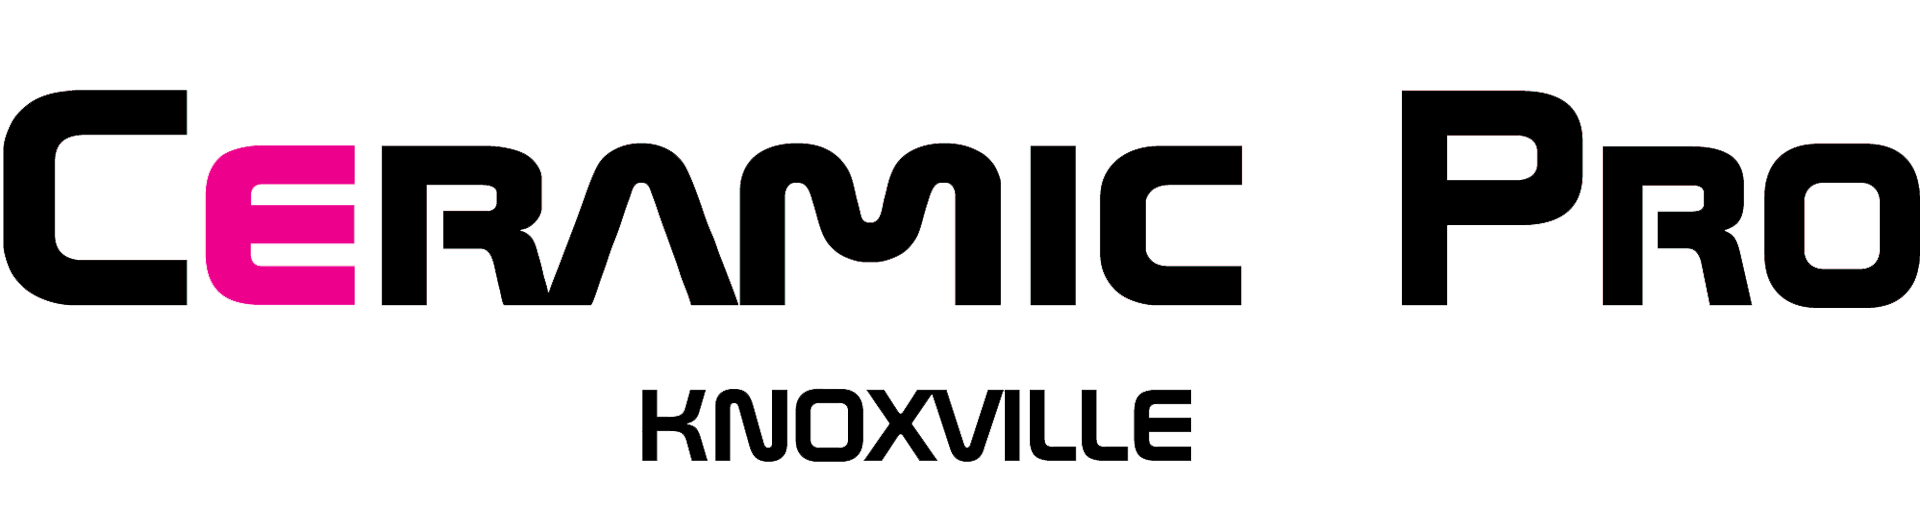 Ceramic Pro Knoxville TN Logo